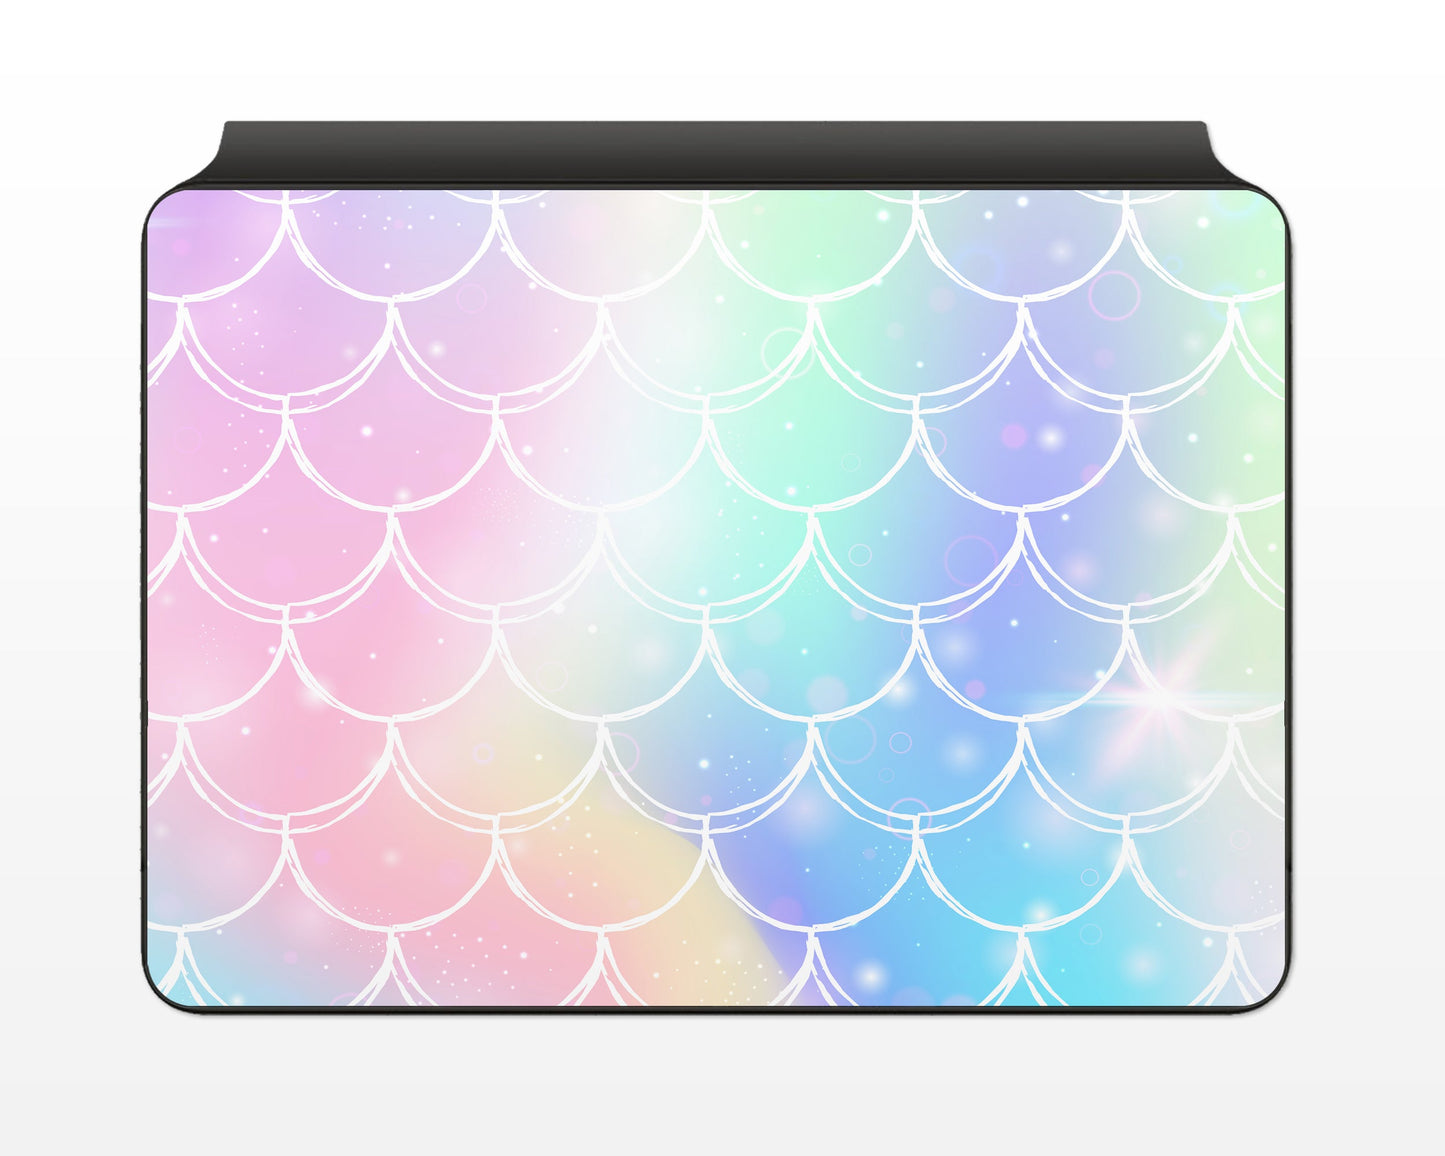 Lux Skins Magic Keyboard Iridescent Pastel Mermaid iPad Pro 12.9" Skins - Pattern Abstract Skin